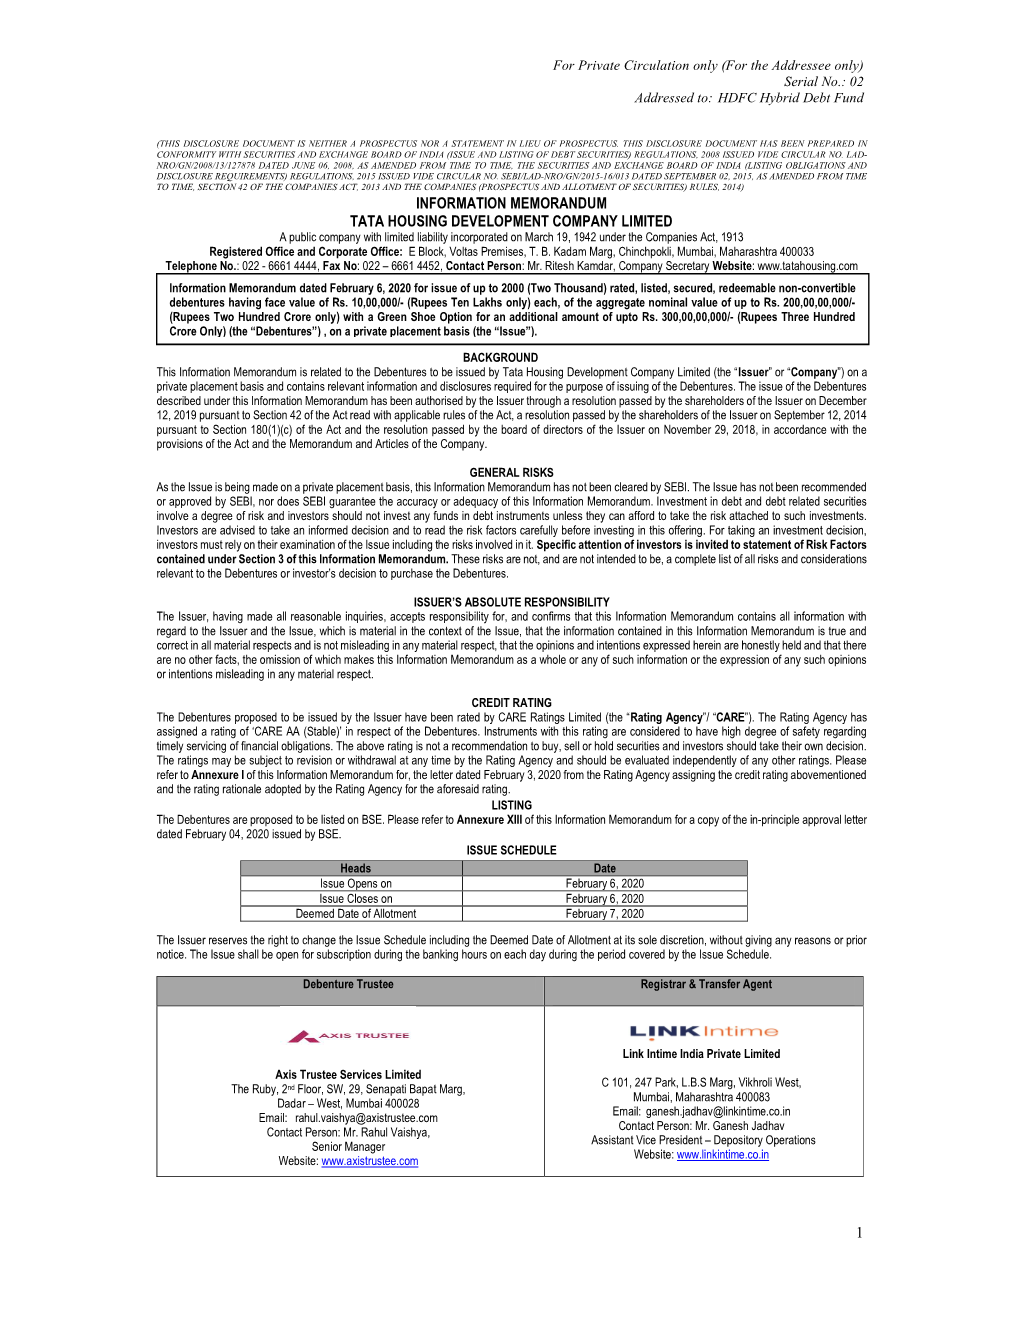 1 Information Memorandum Tata Housing Development Company Limited